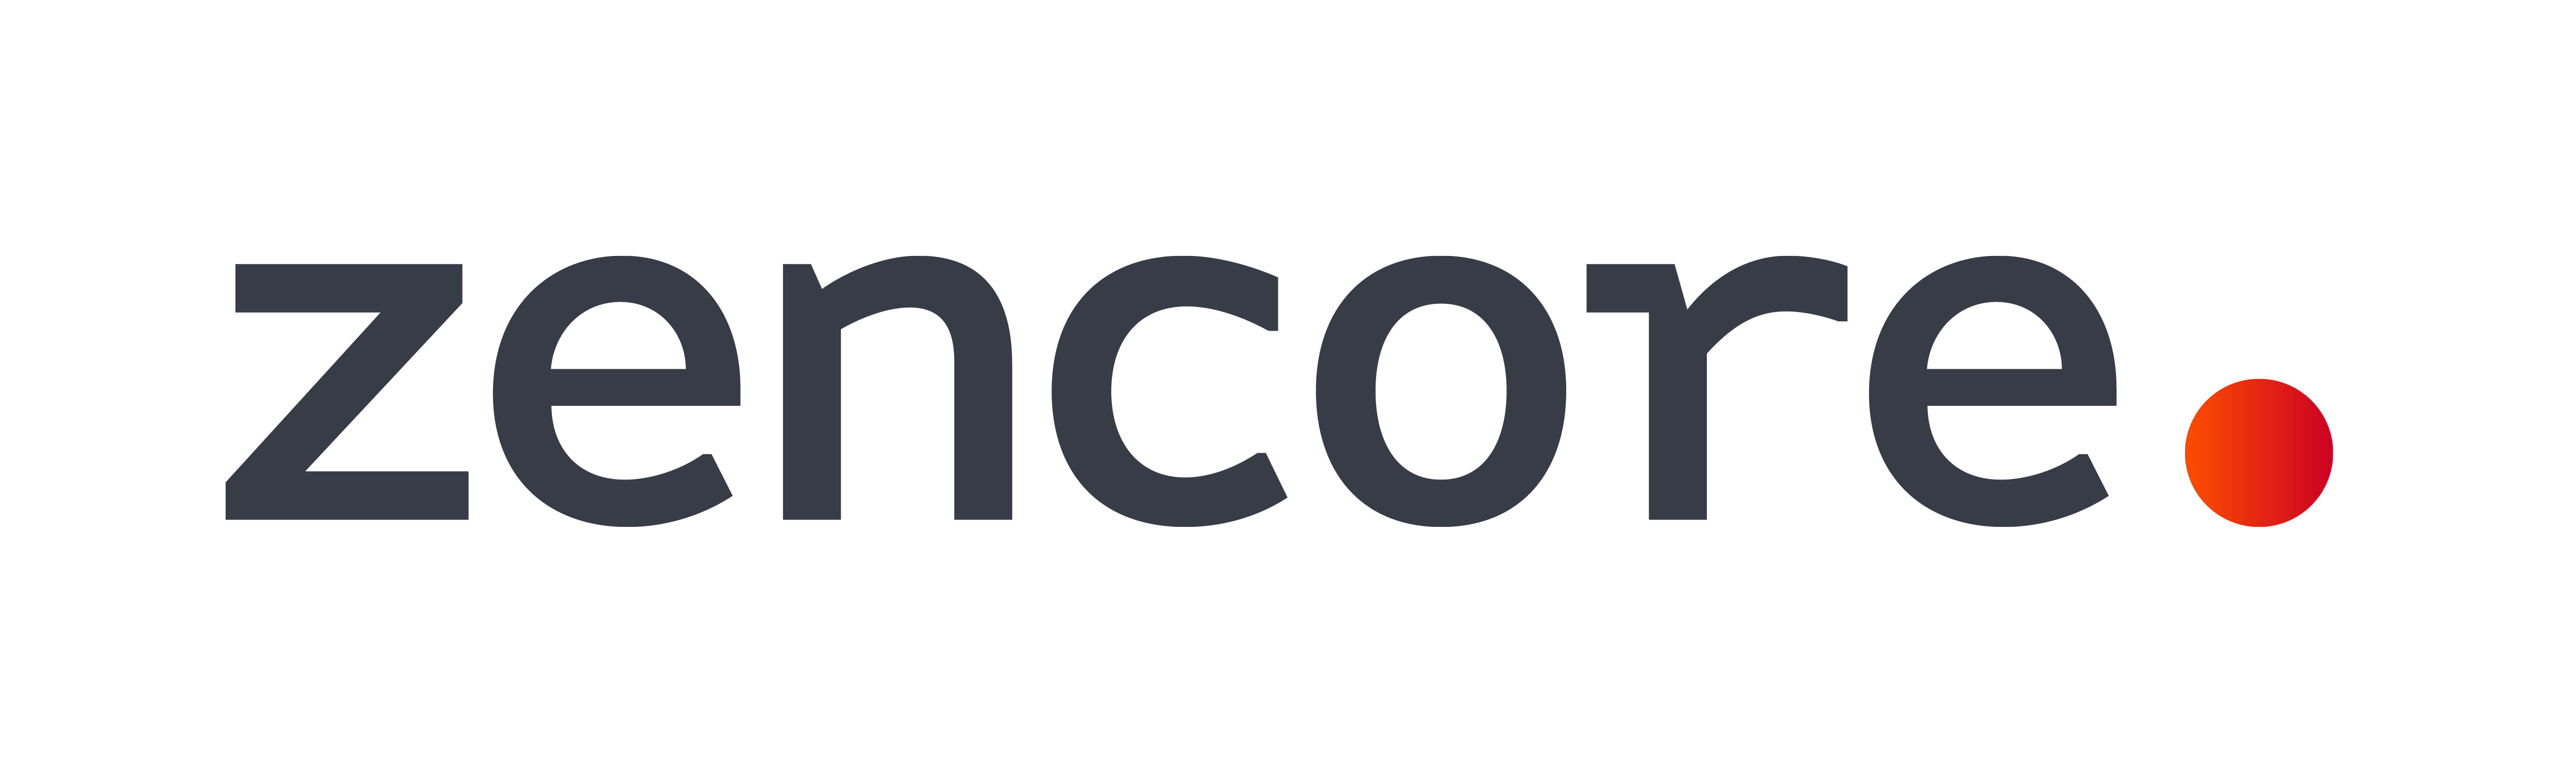 Zencore logo